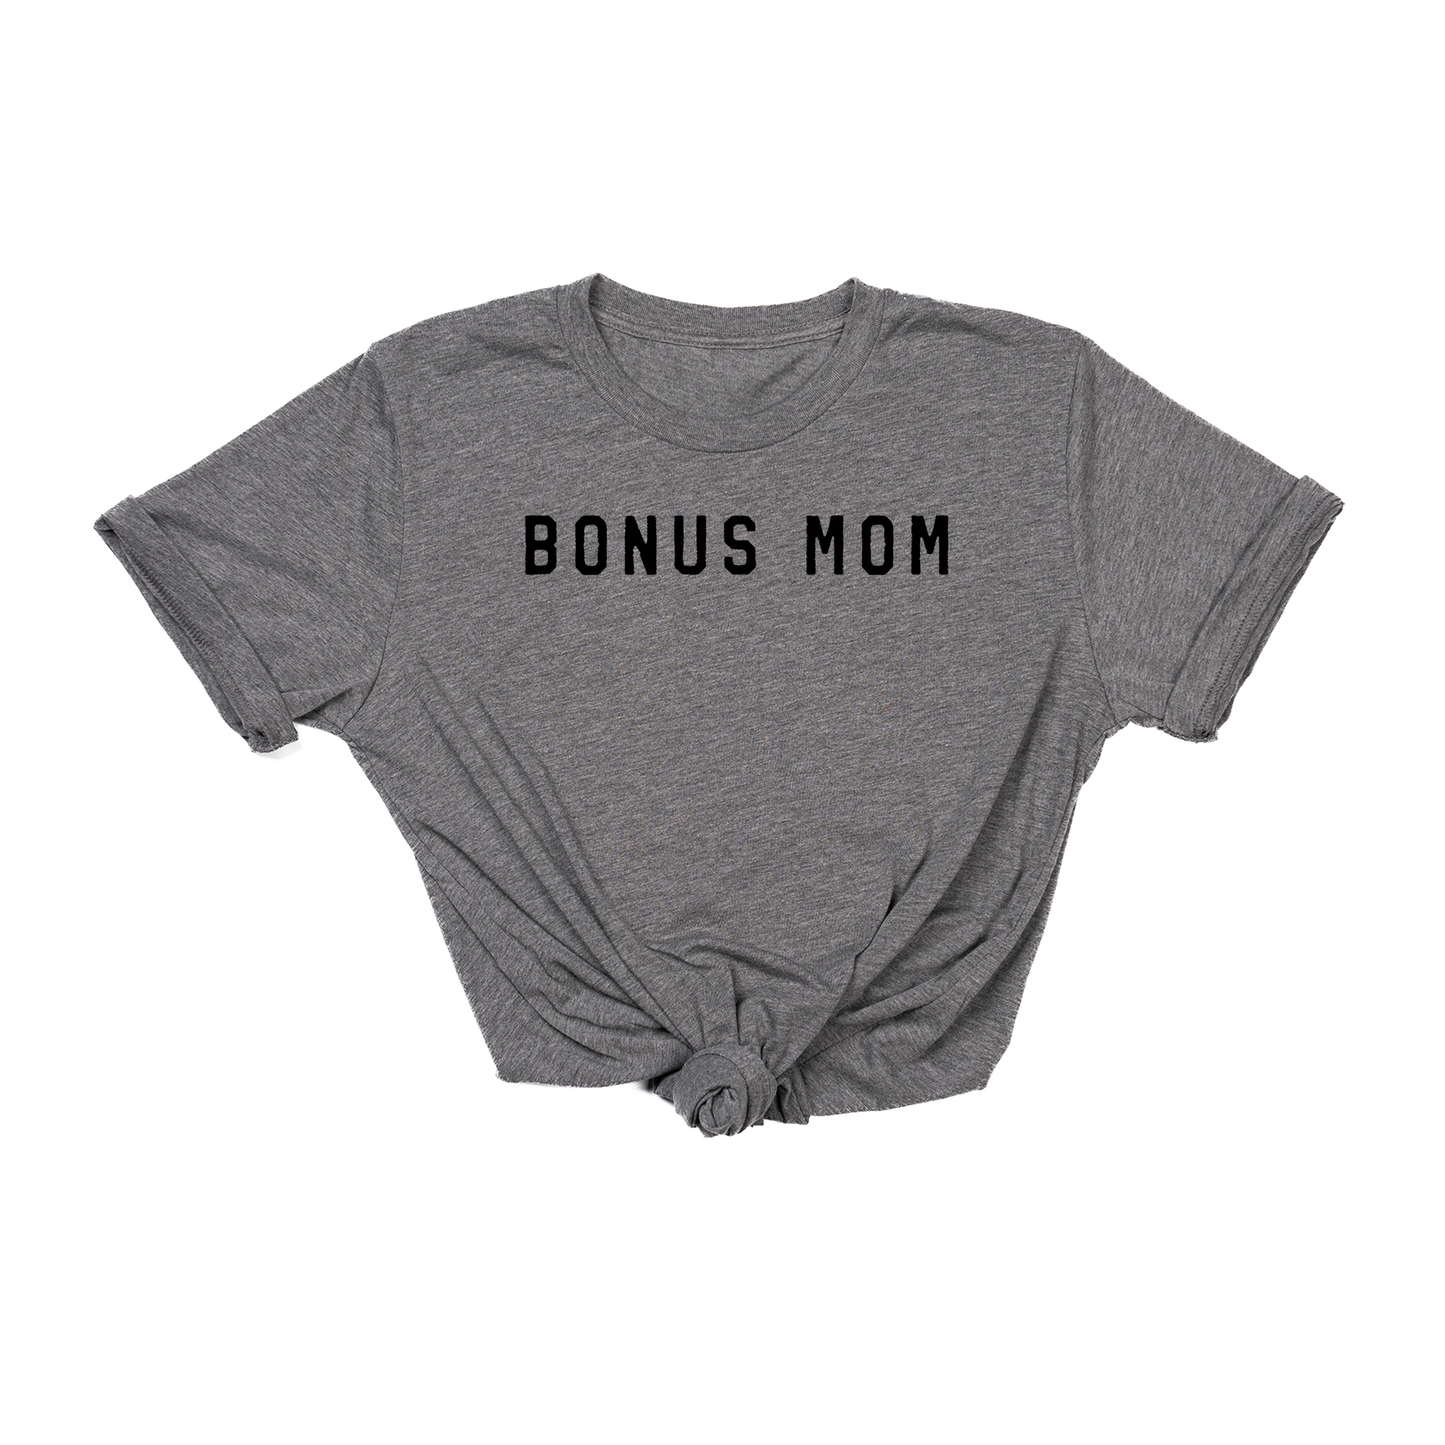 Bonus Mom (Black) - Tee (Gray)